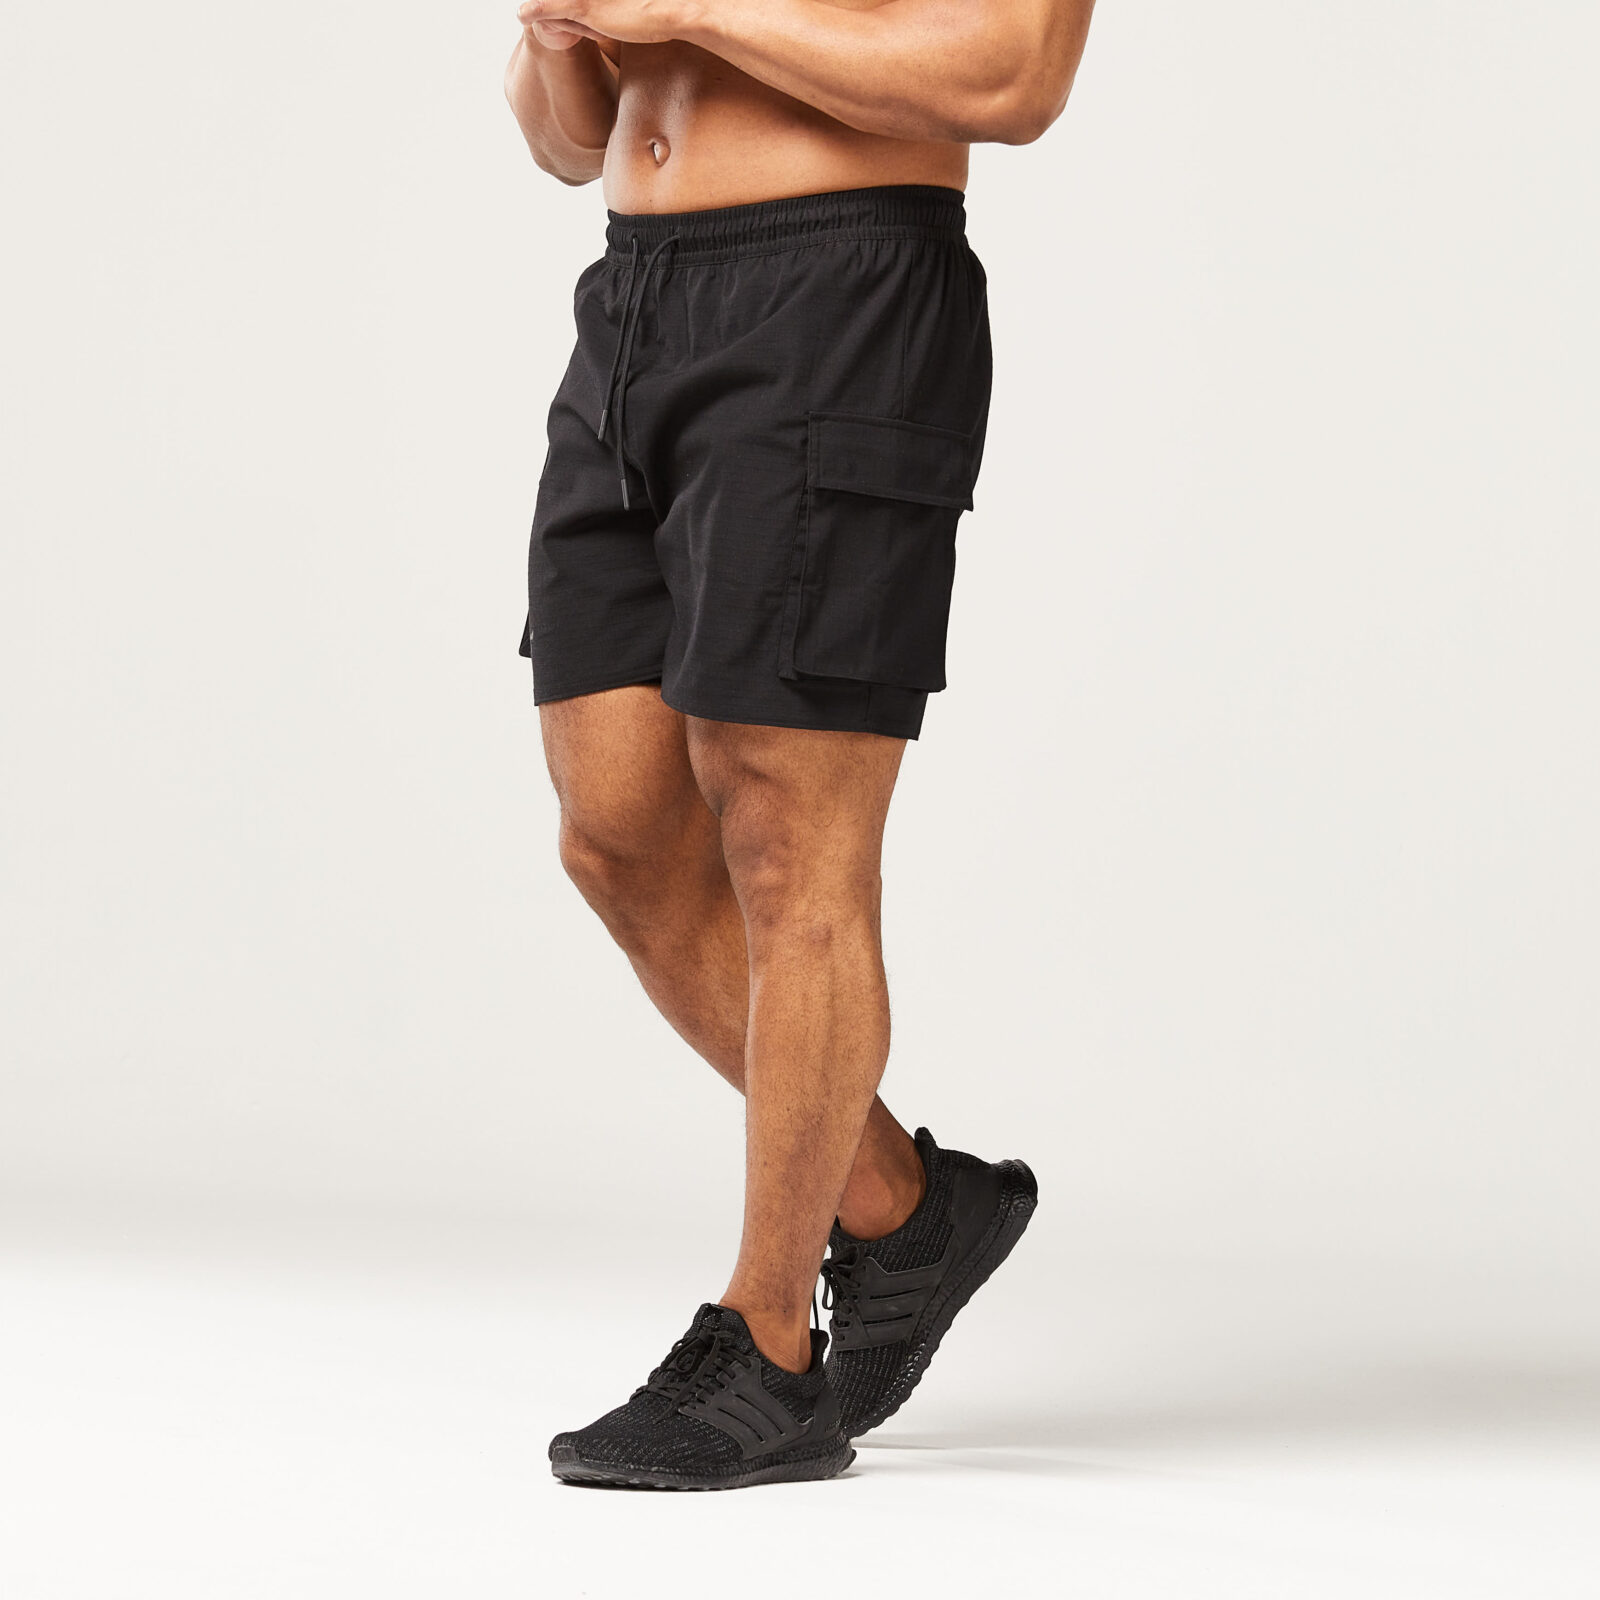 squatwolf-gym-wear-code-2-in-1-cargo-shorts-black-workout-short-for-men